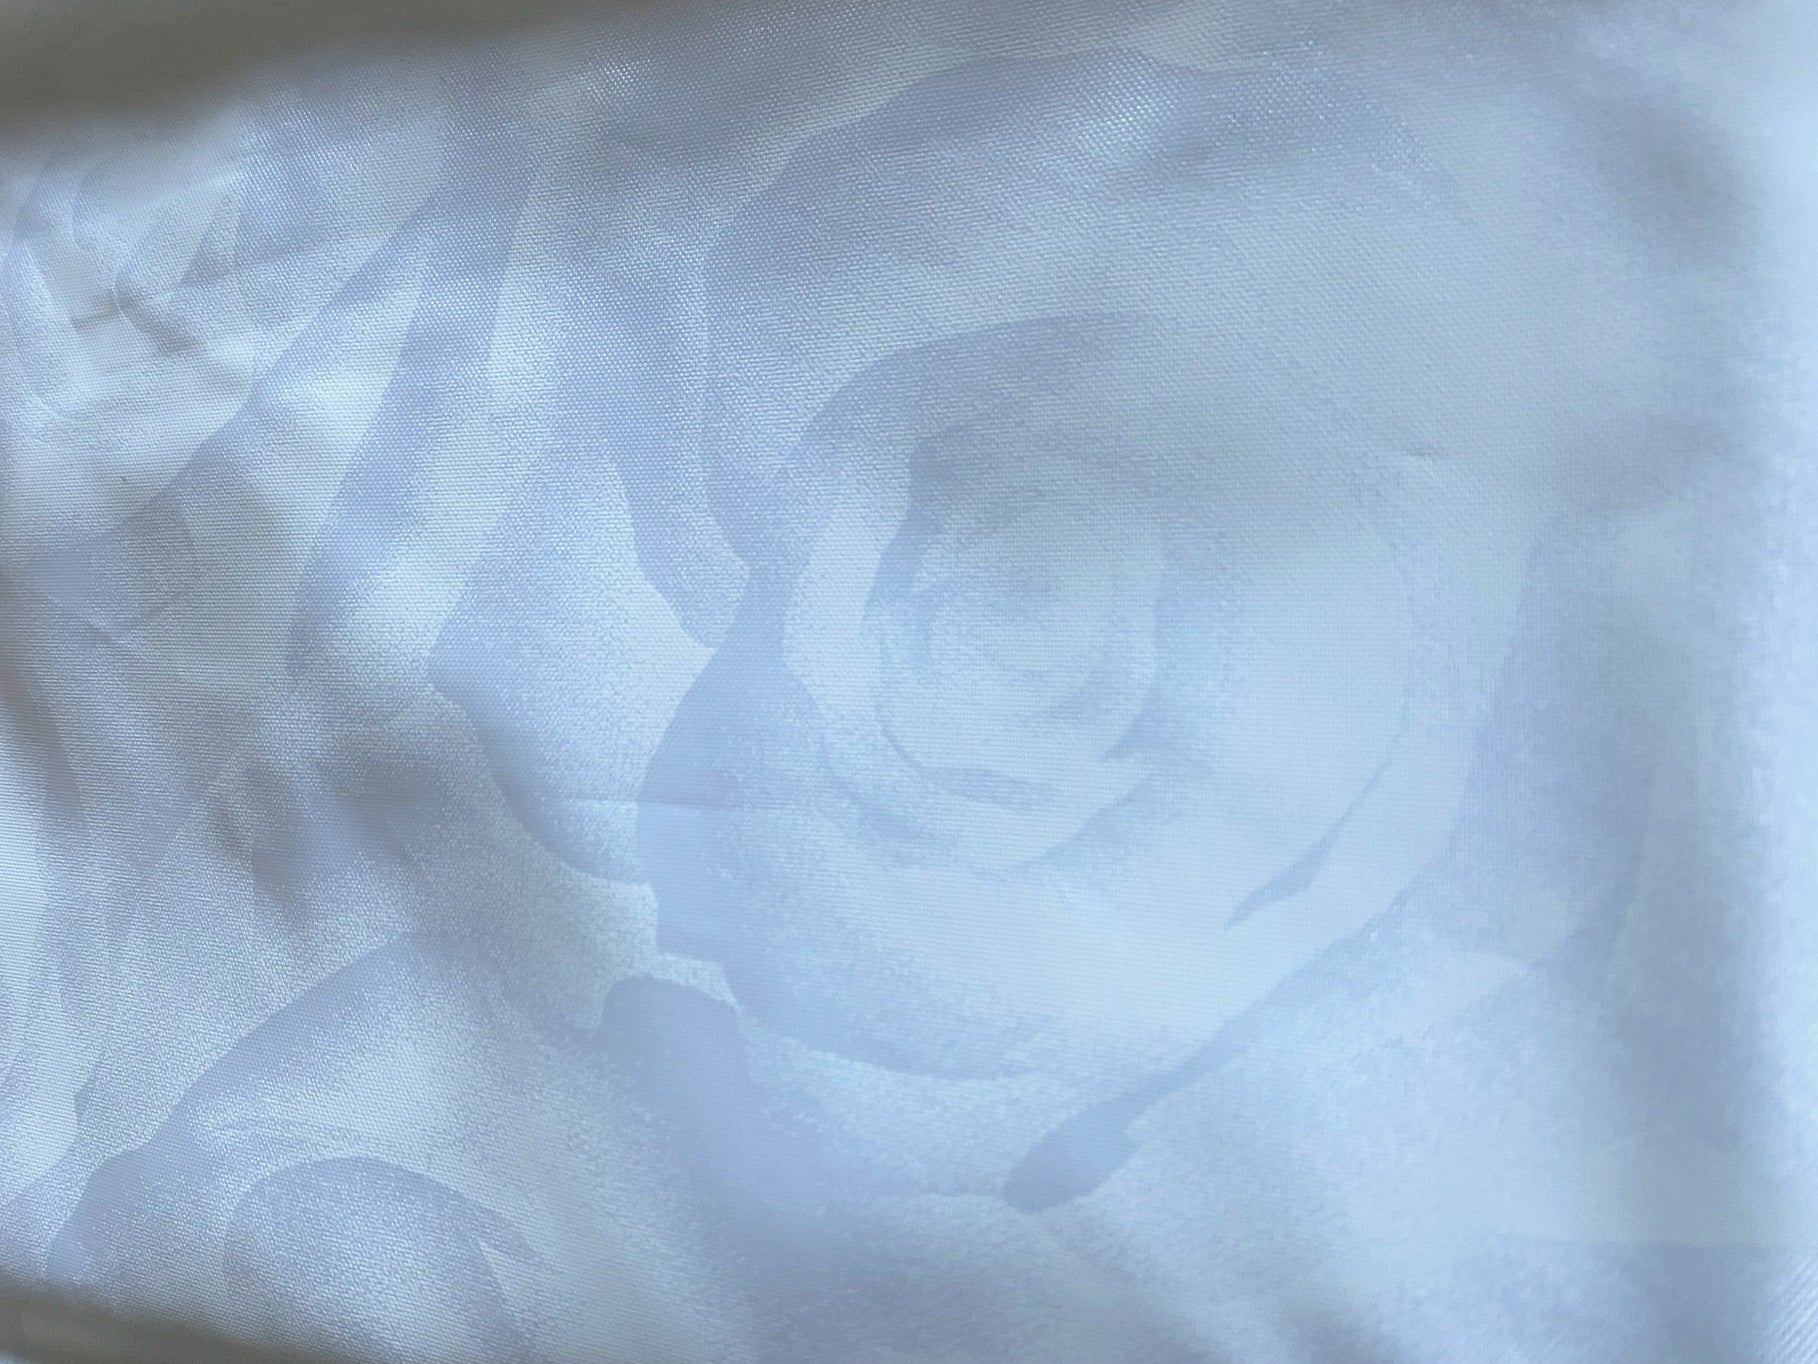 Textil-Duschvorhang Roses weiß BxH 180x200cm